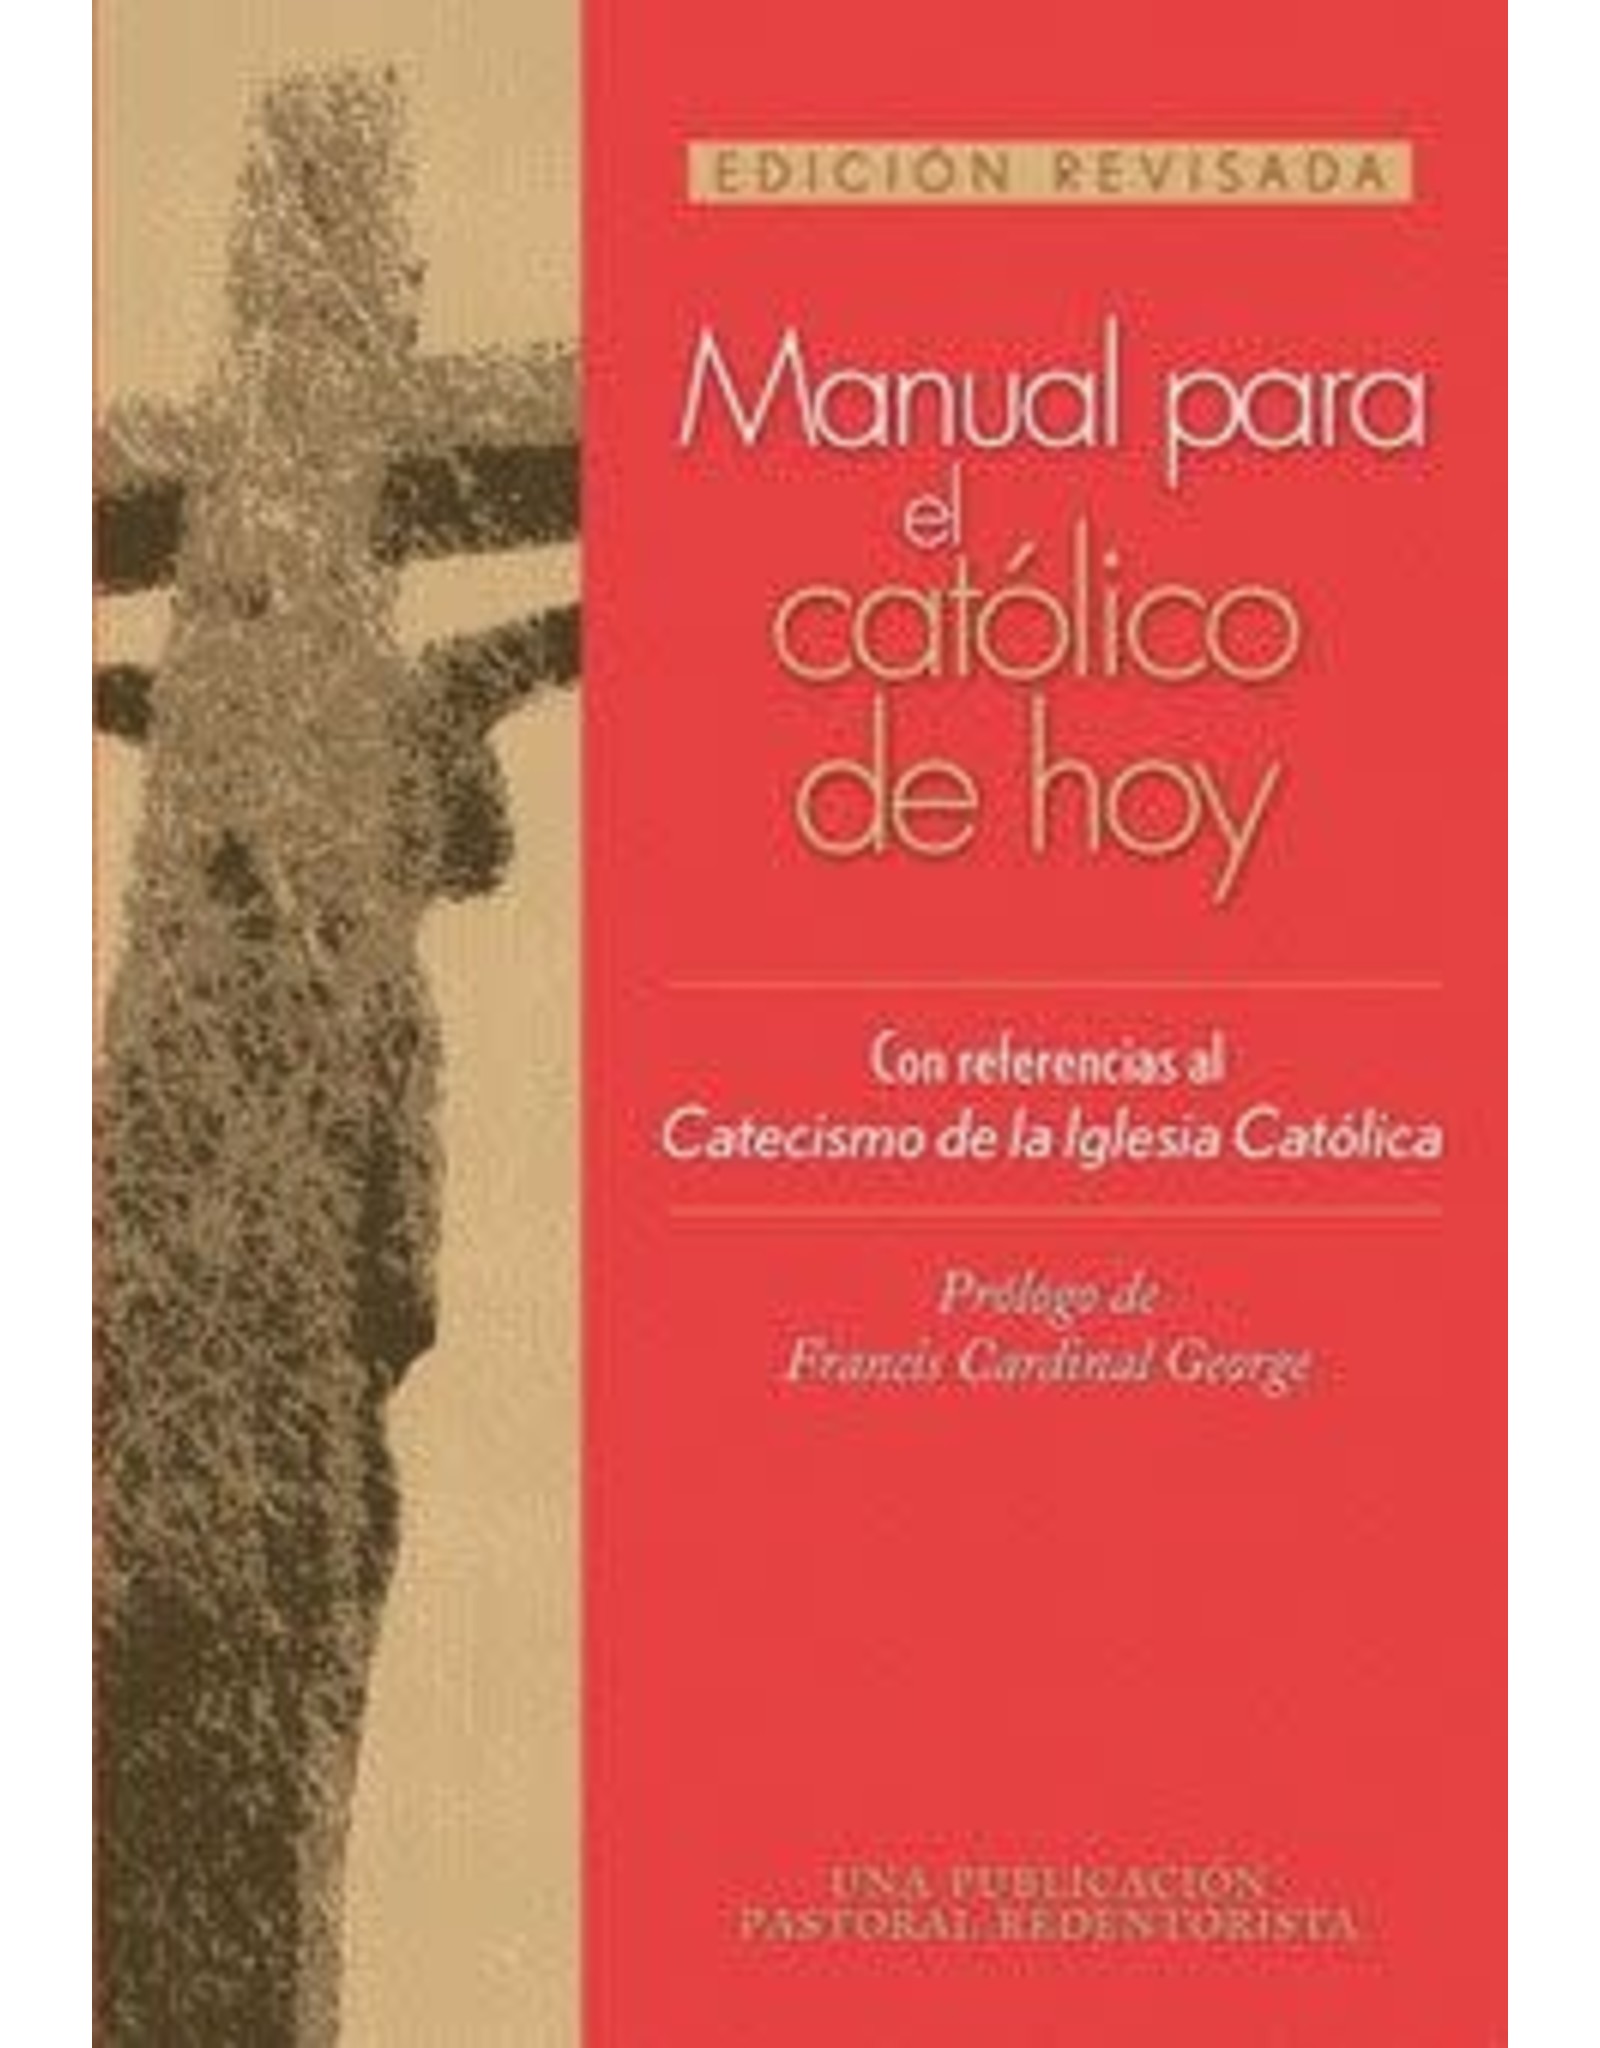 Liguori Publications Manual para el católico de hoy